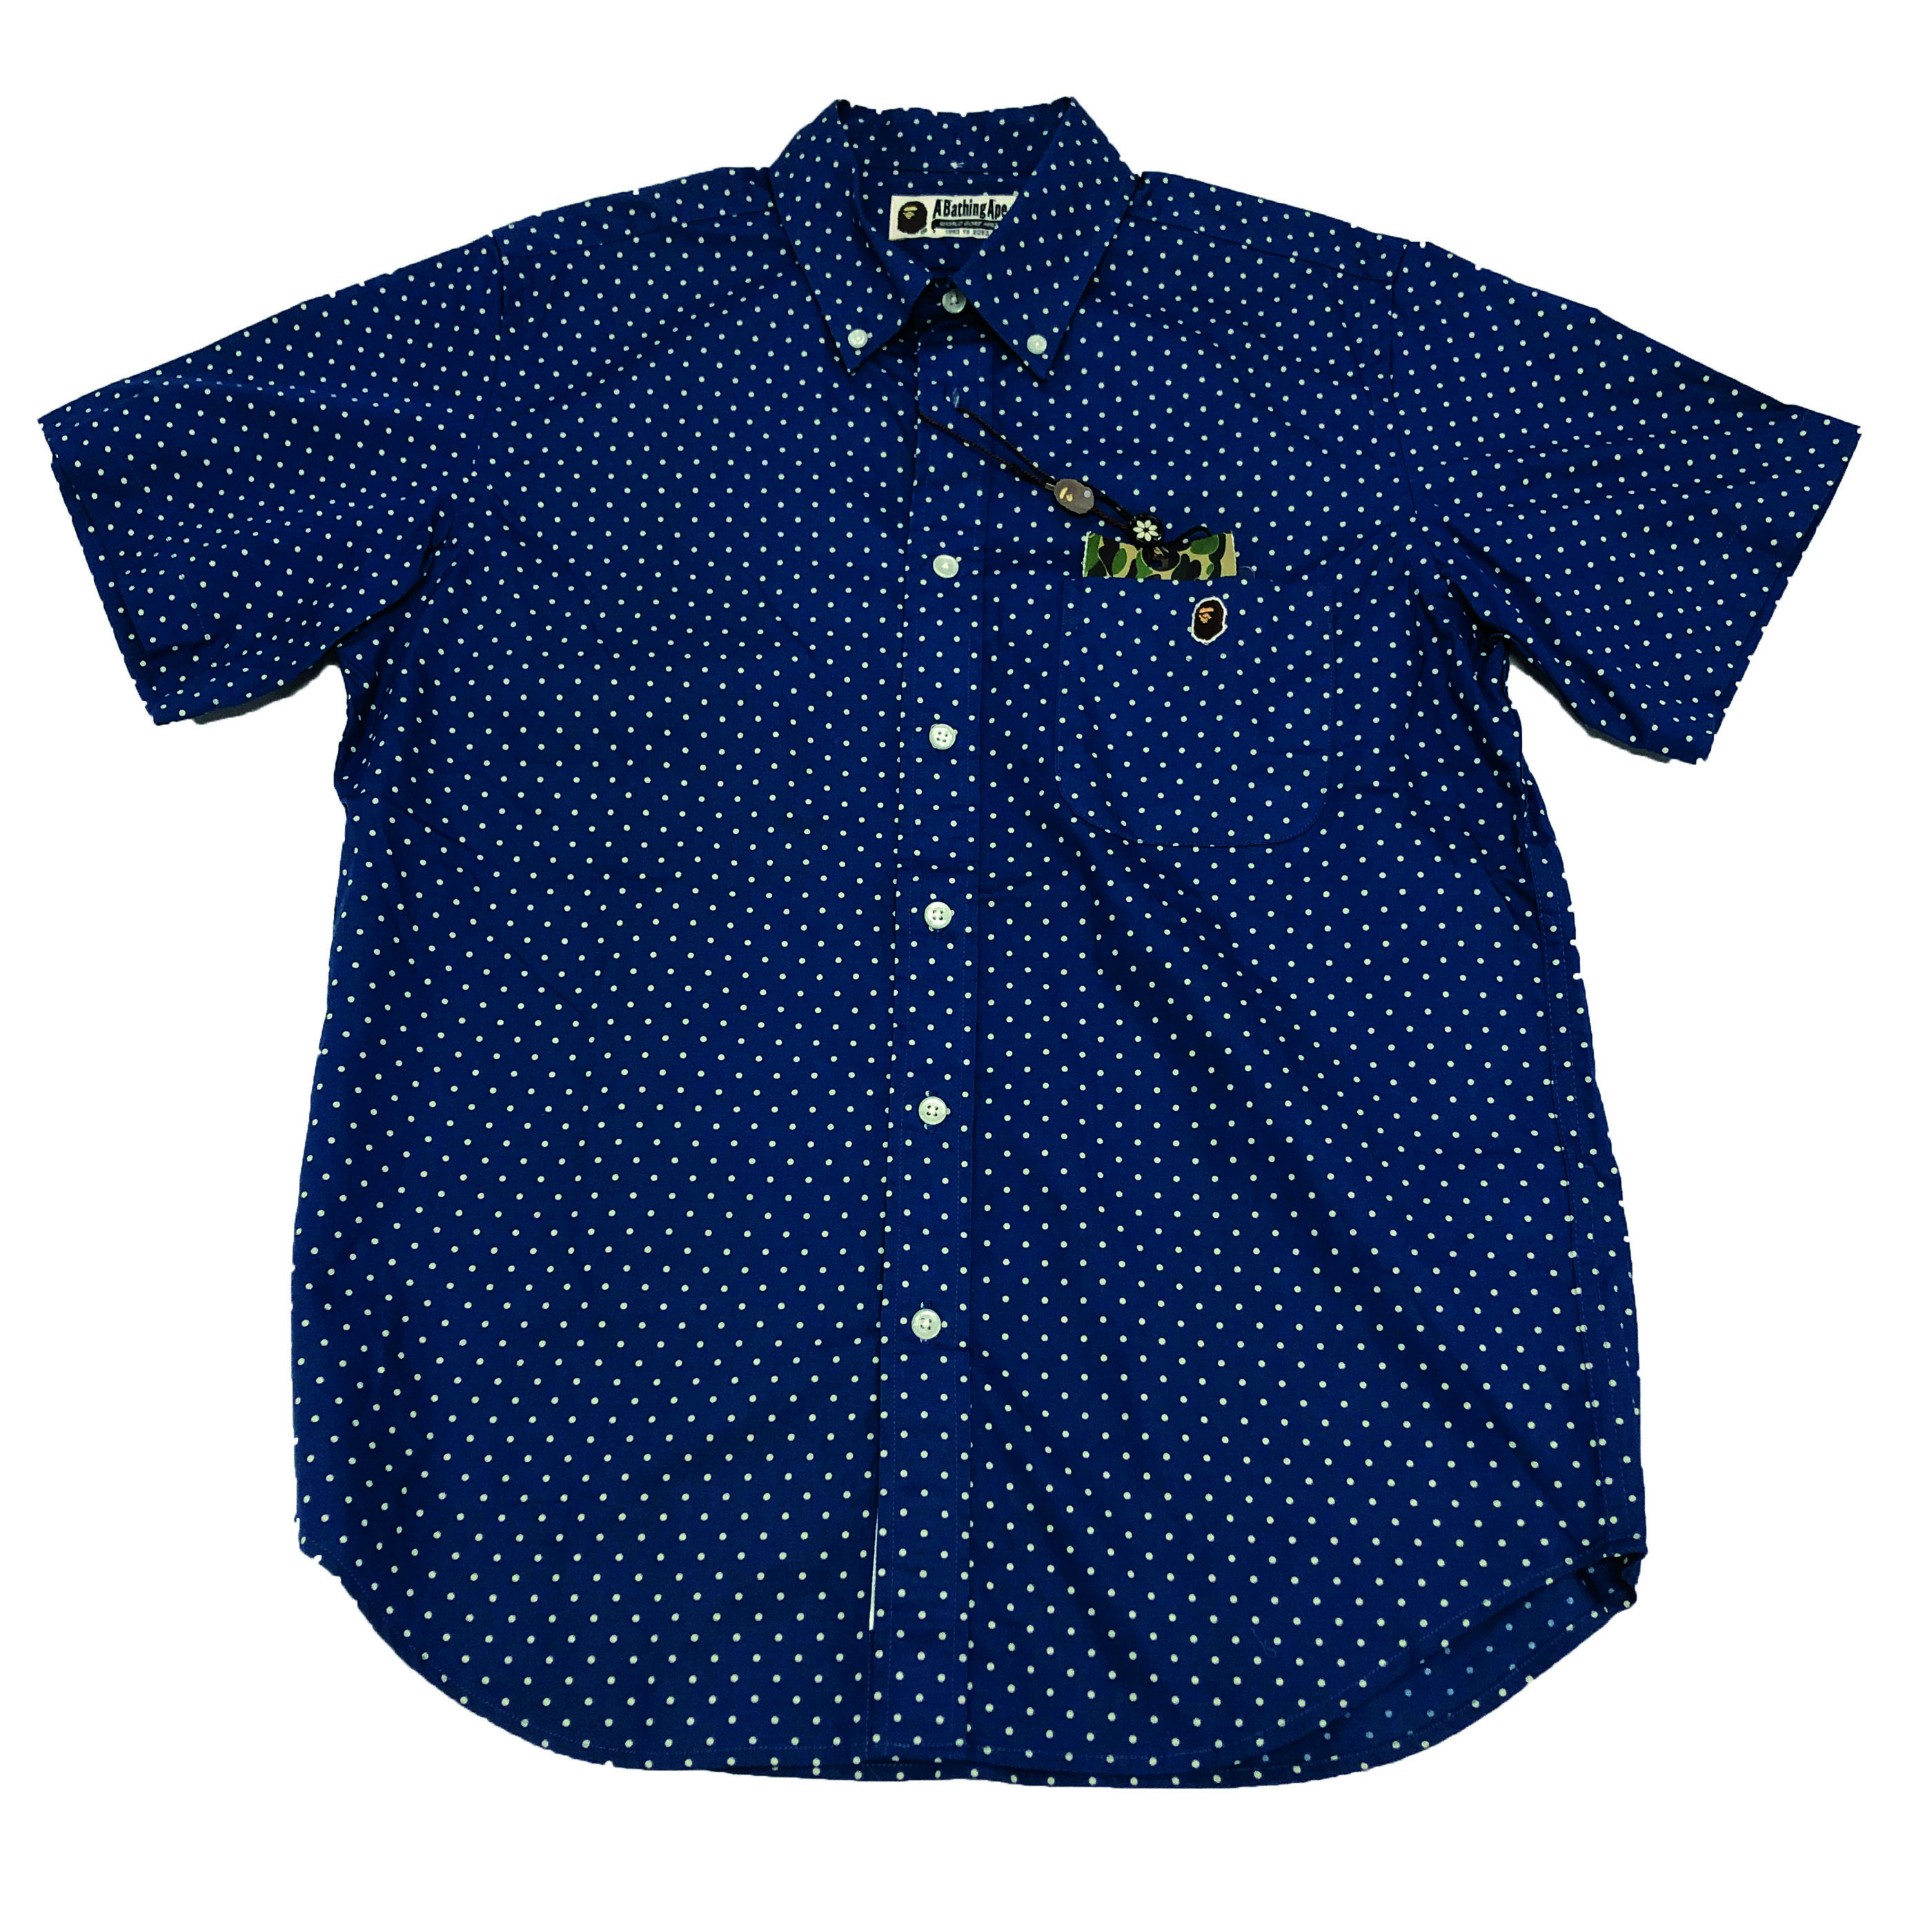 [Bape] Navy Dot shirt - Size L